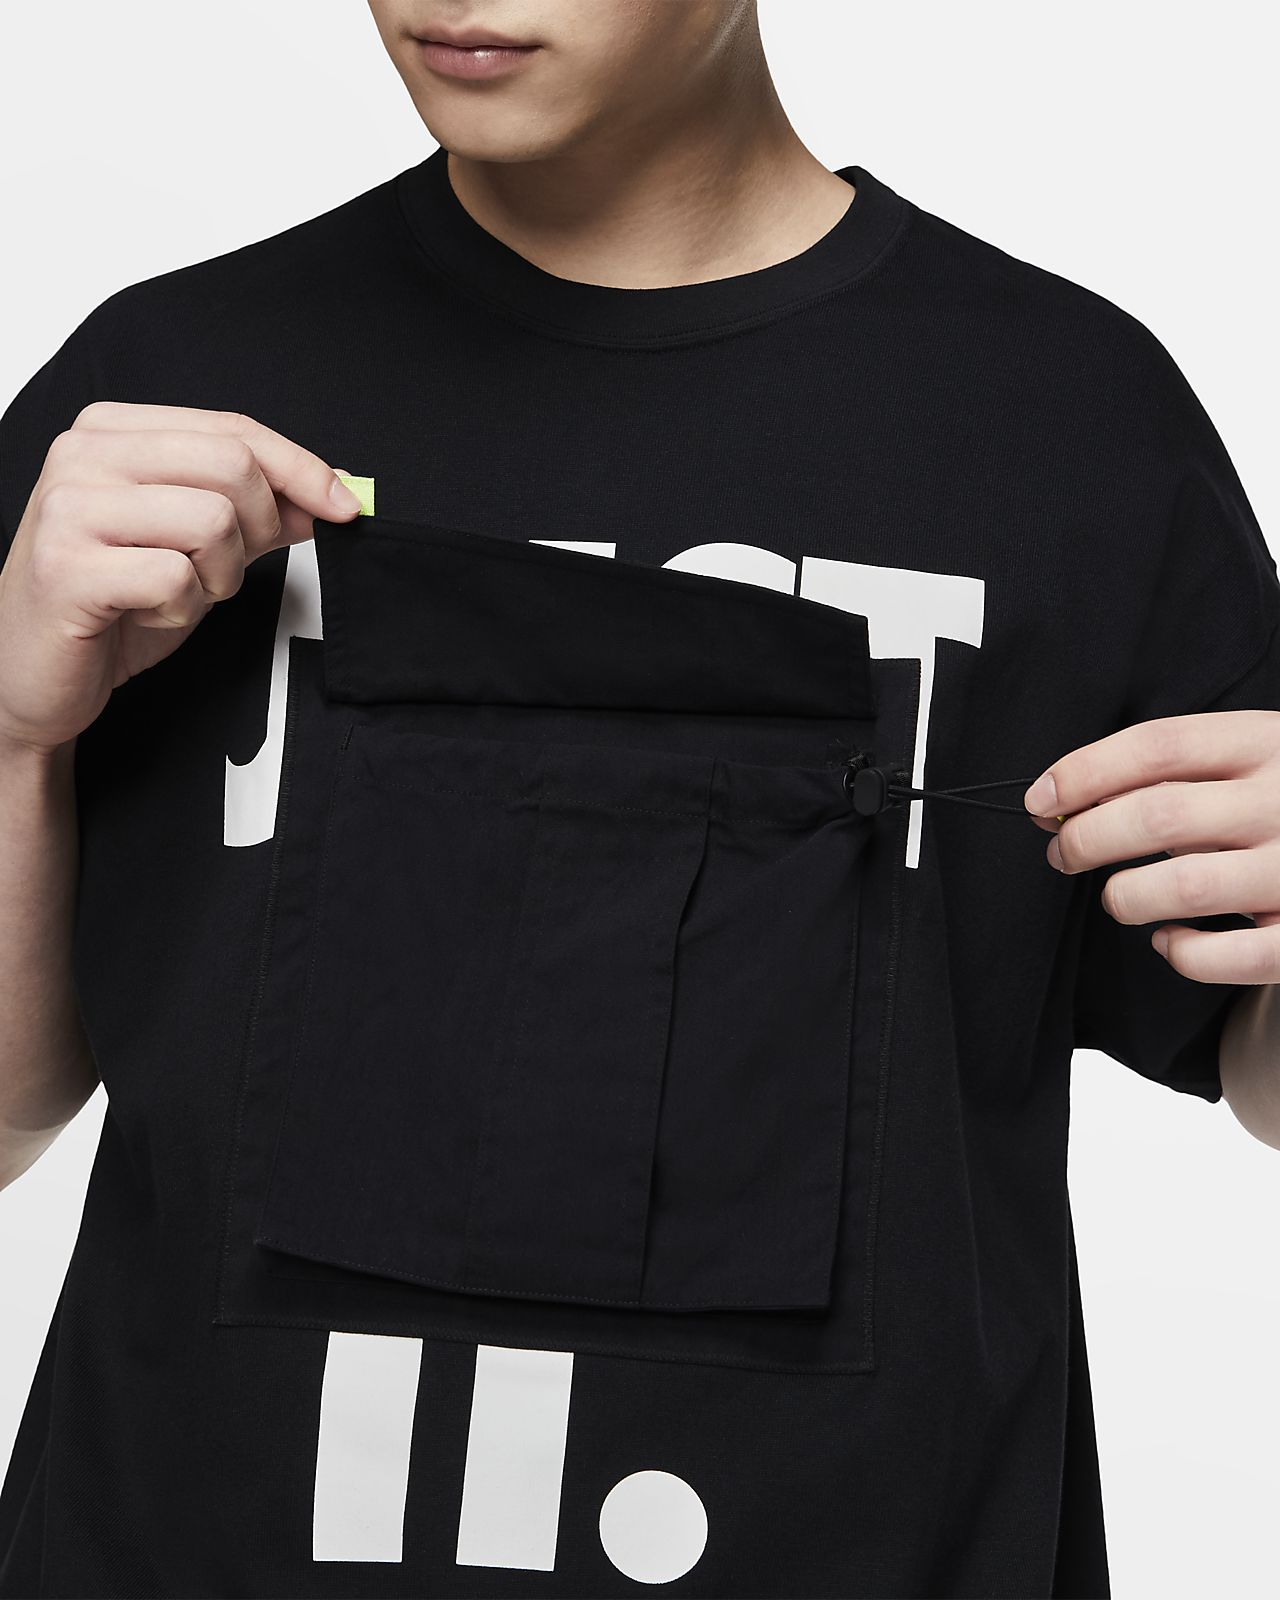 Nike公式 ナイキ Ispa メンズ Jdi Tシャツ オンラインストア 通販サイト